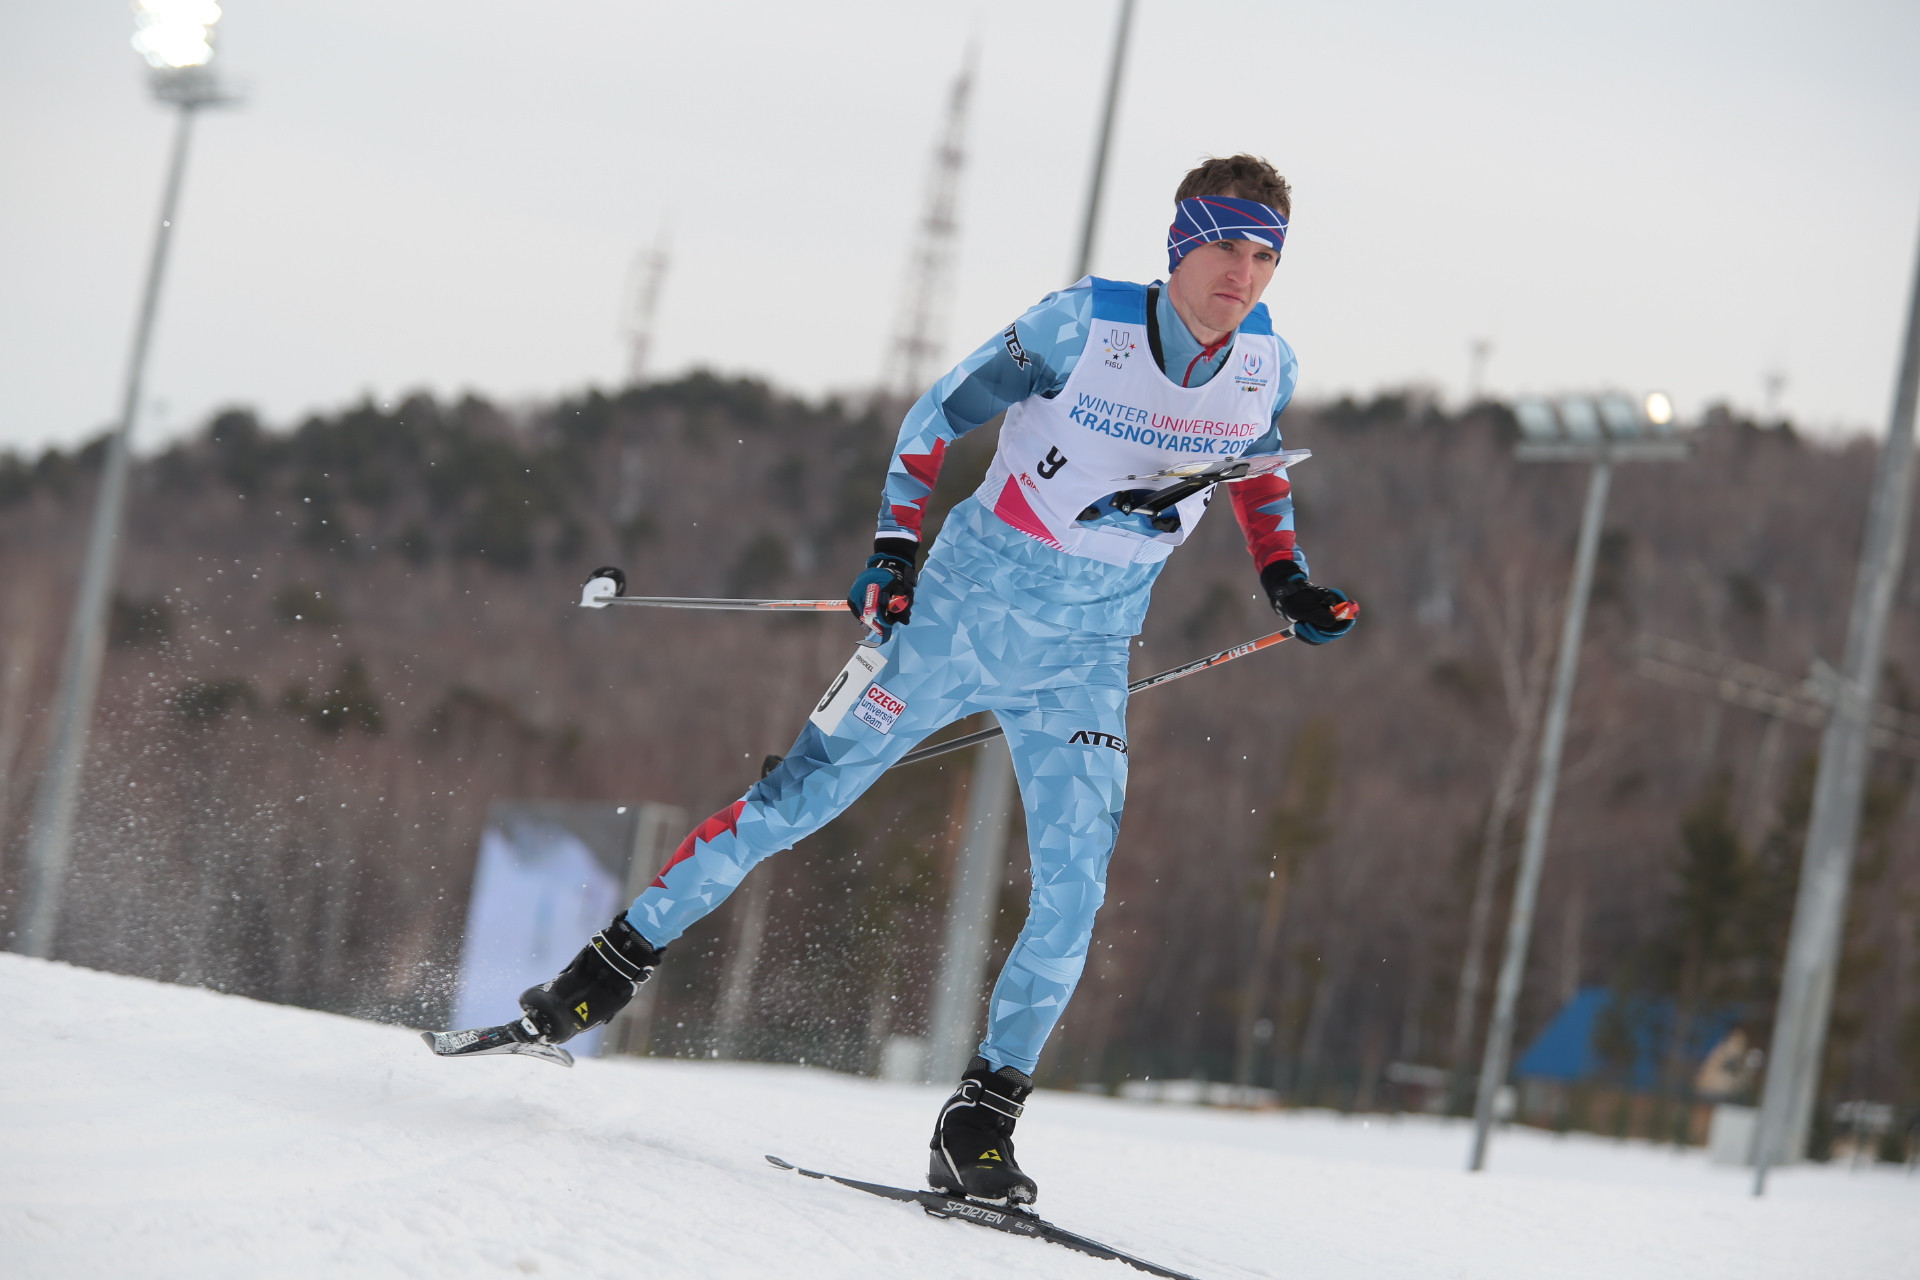 Ski orienteering makes Winter Universiade debut at Krasnoyarsk 2019